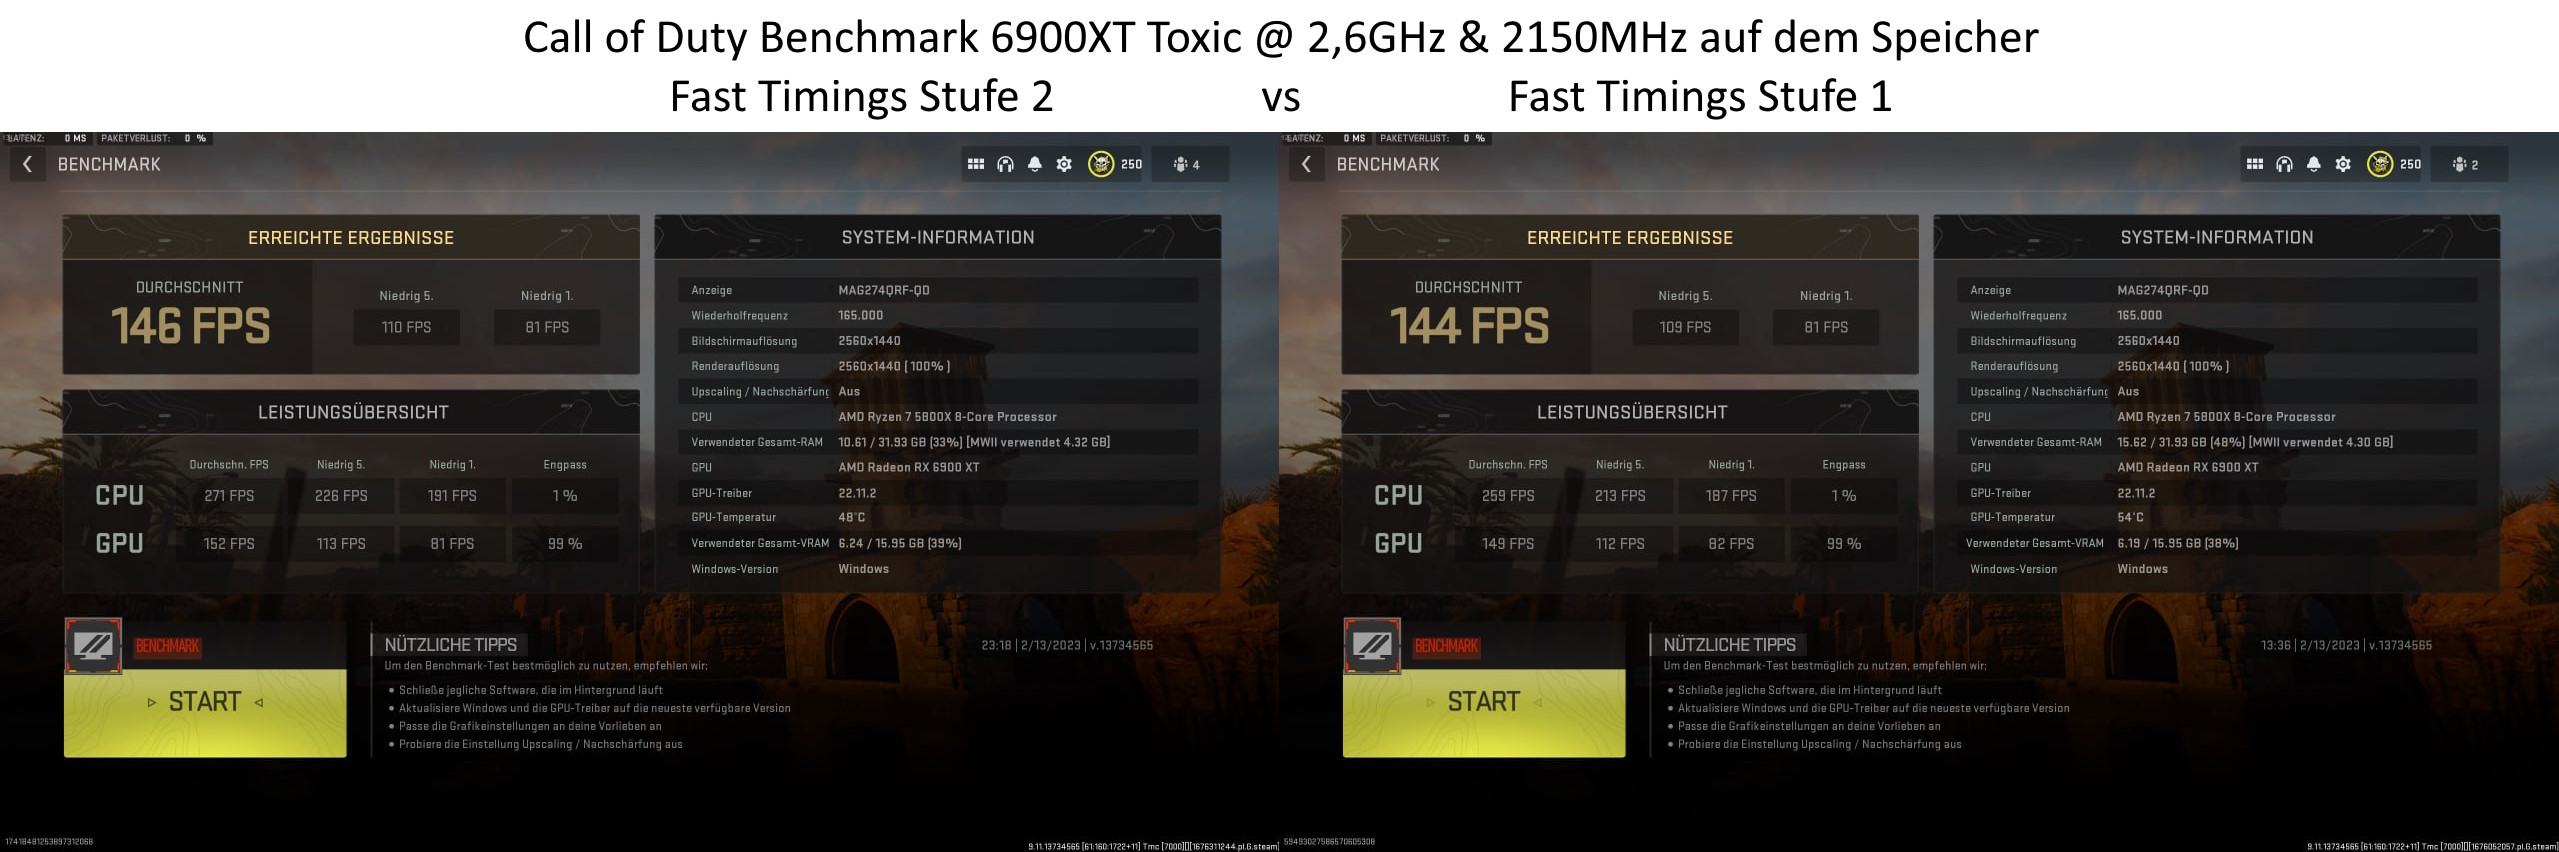 Call of Duty Benchmark 6900XT Toxic Fast Timings Vergleich.jpg